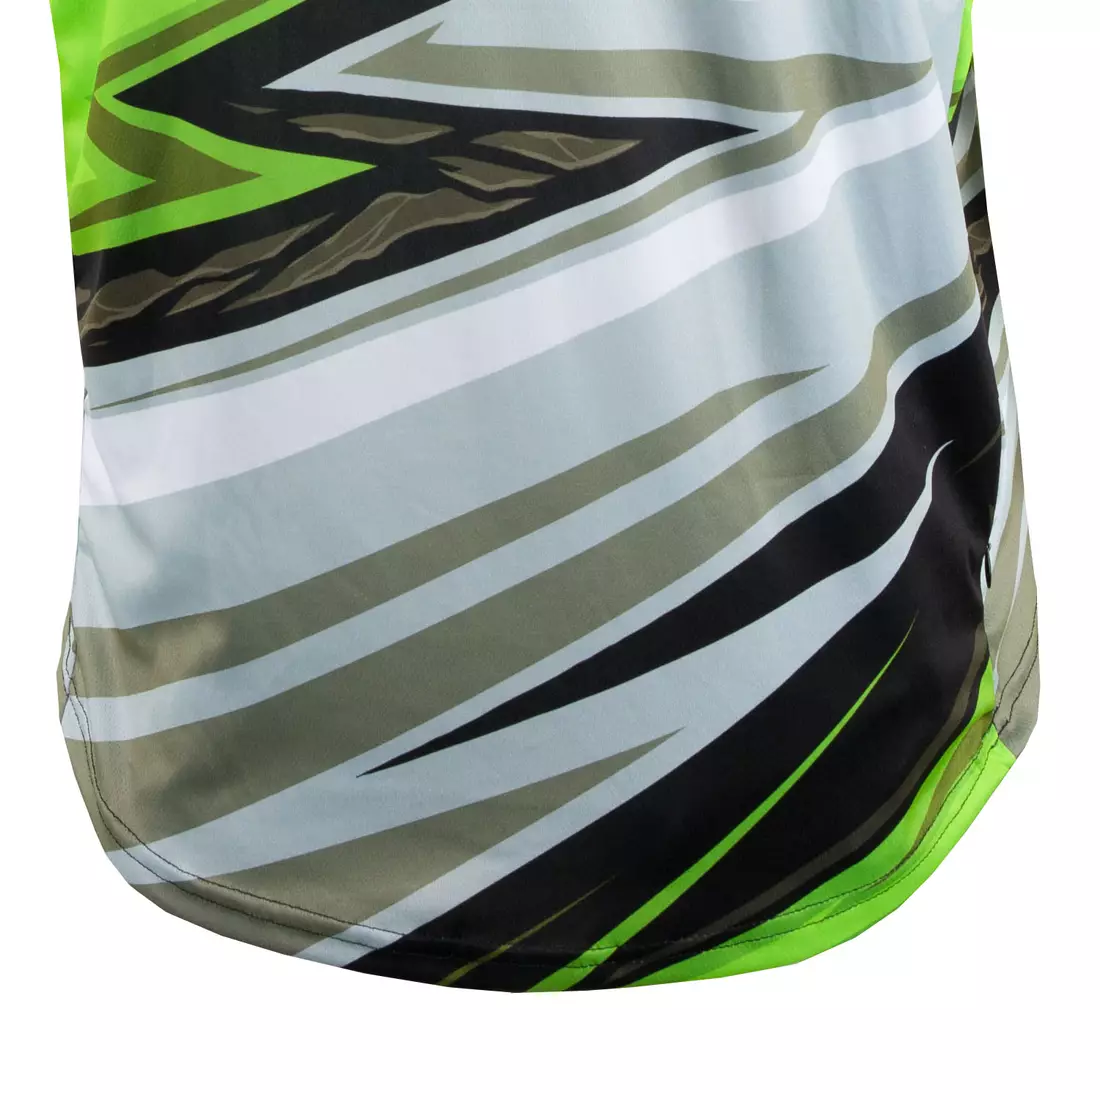 KAYMAQ DESIGN M50 tricou pentru bărbați de ciclism MTB, fluor